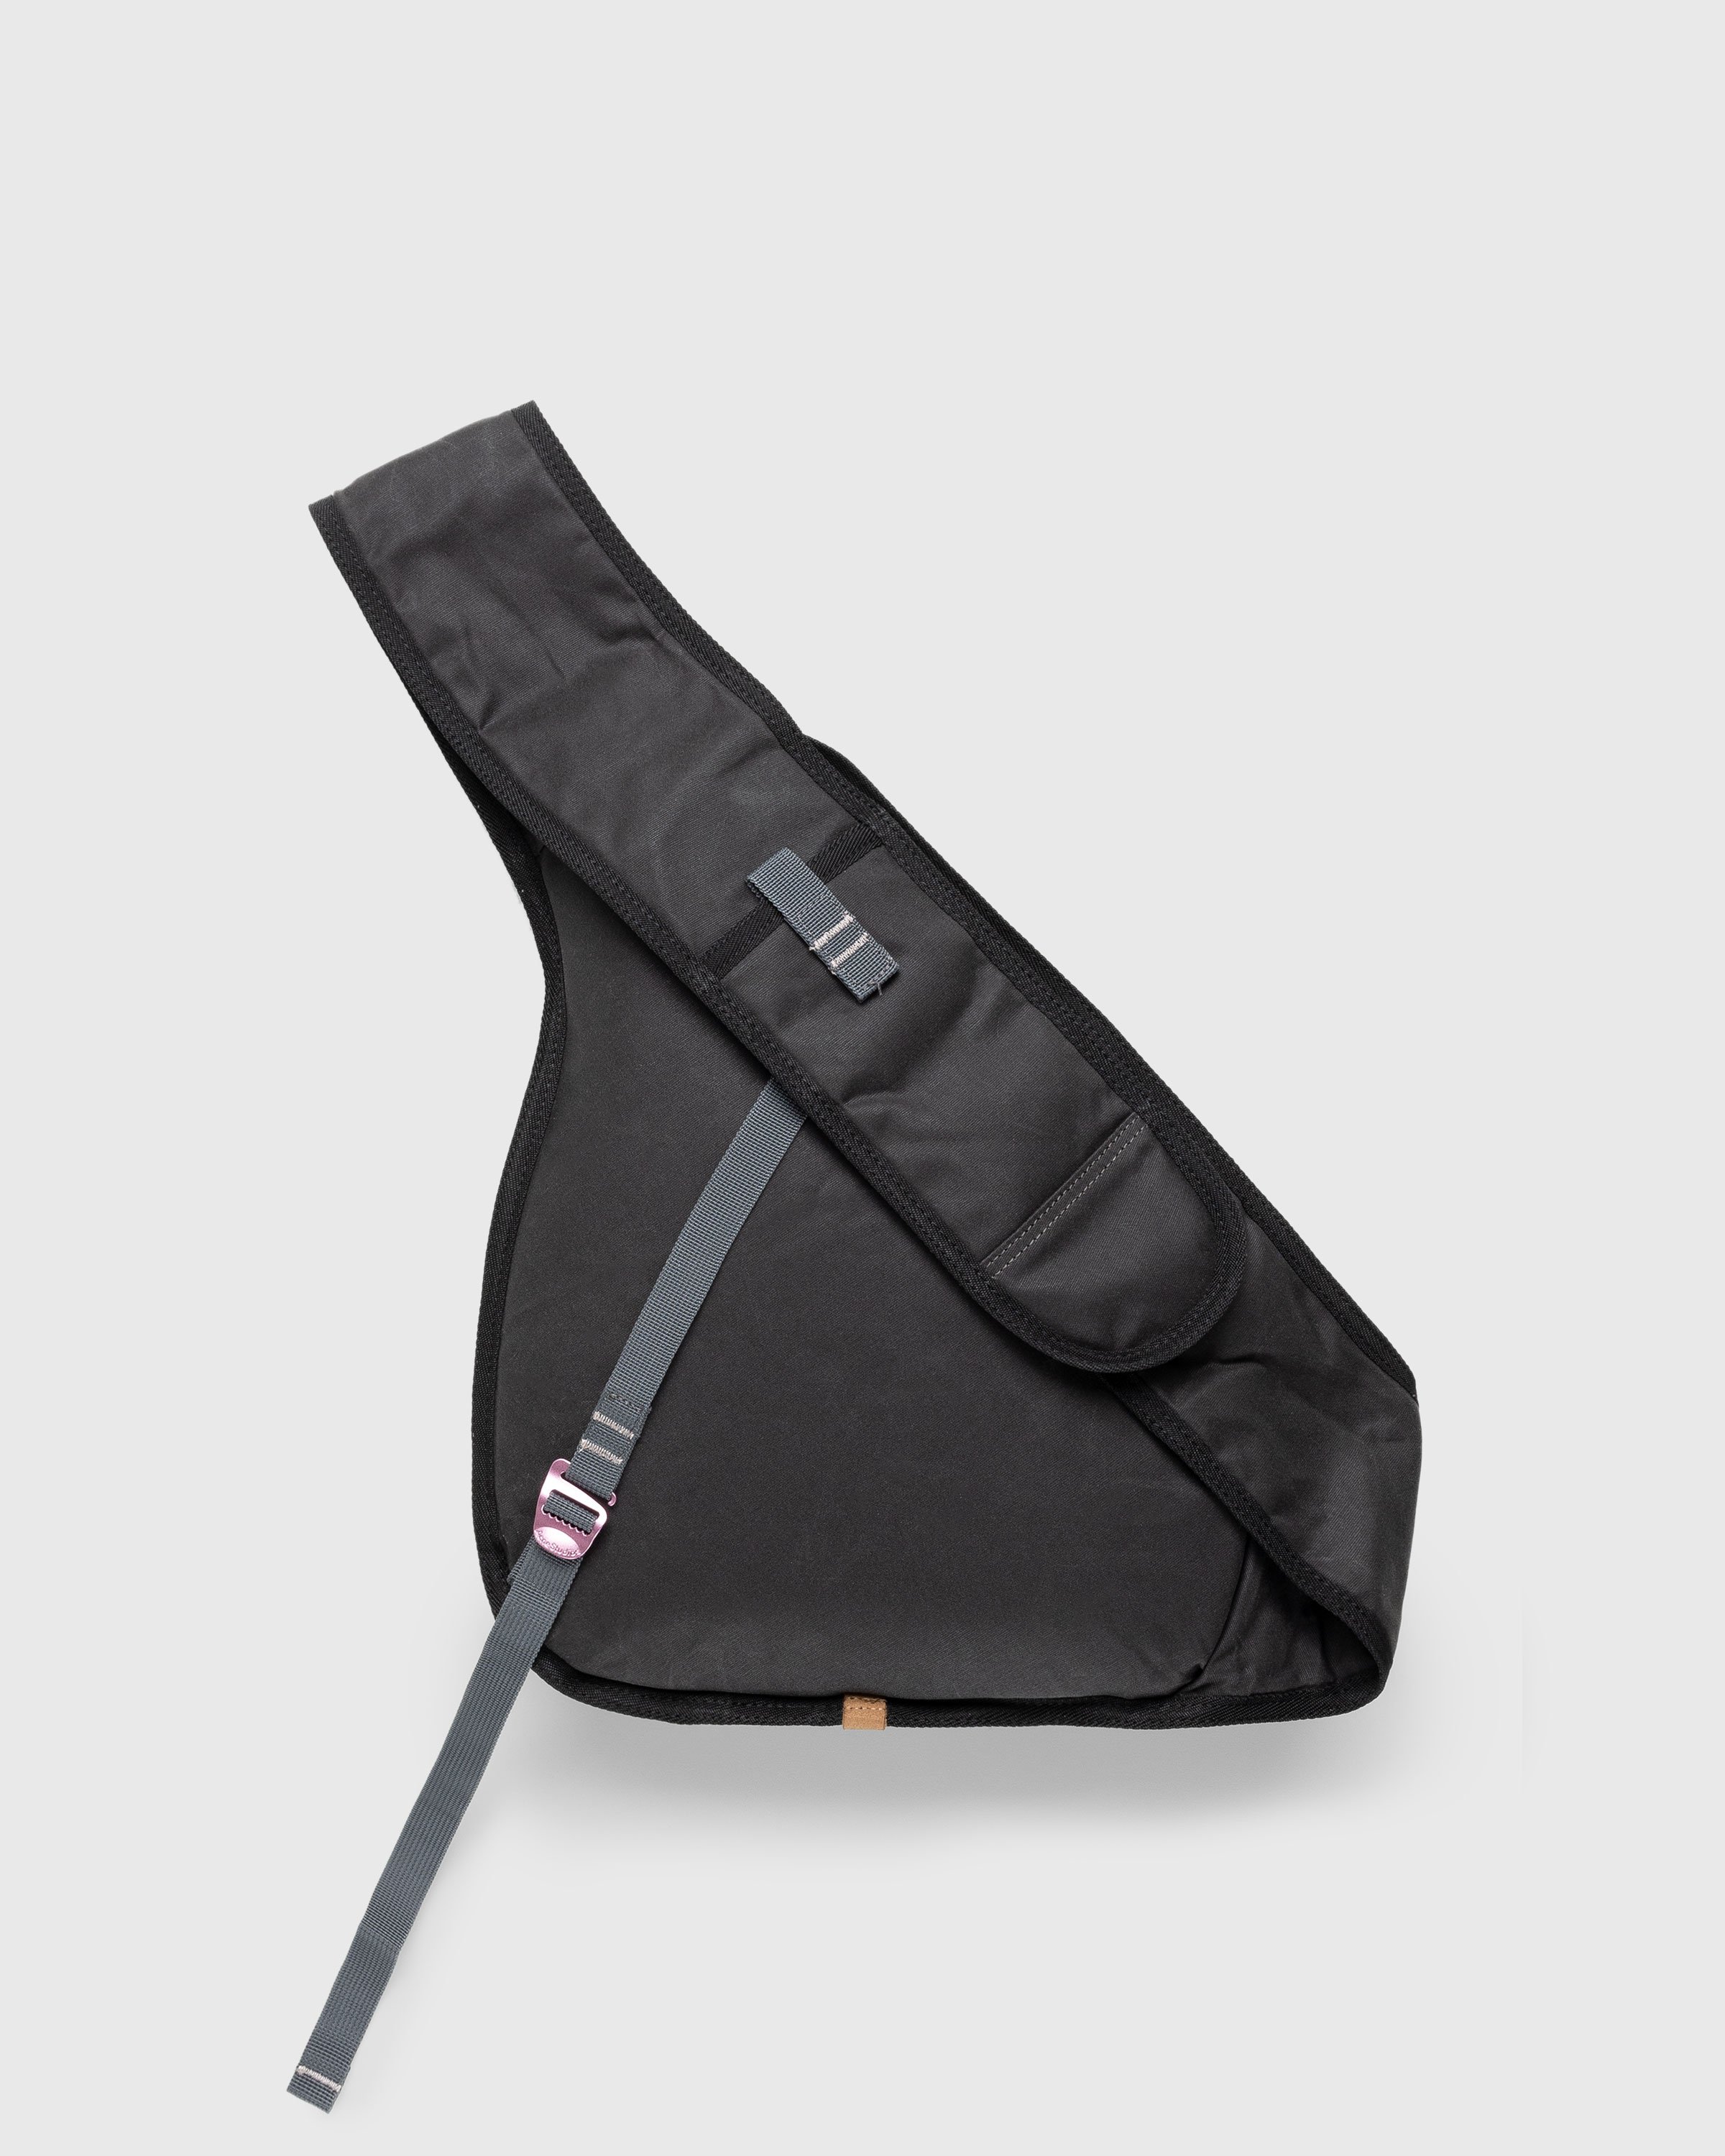 Acne Studios - Sling Backpack Grey/Black - Accessories - Multi - Image 2